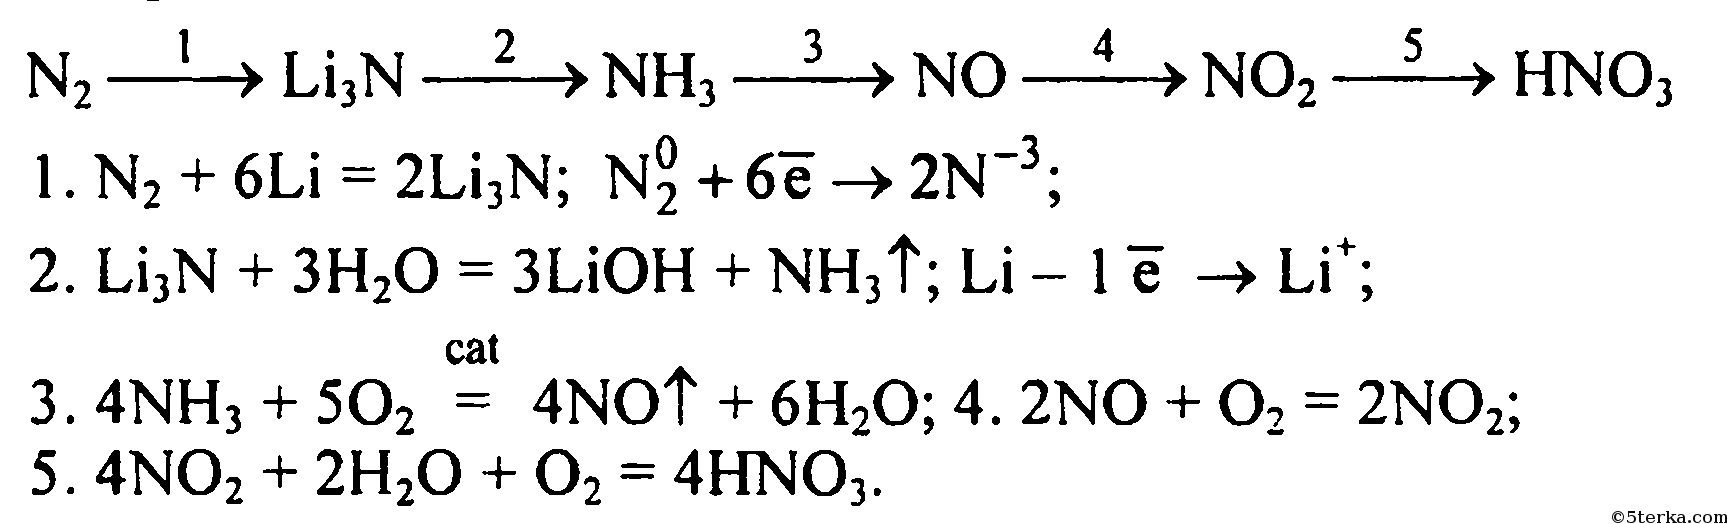 Нитрат аммония молекулярное и ионное уравнение. Цепочка превращений азота. Цепочка превращение реакций азота. Цепочка реакций с азотом. Цепочка реакций азотная кислота.